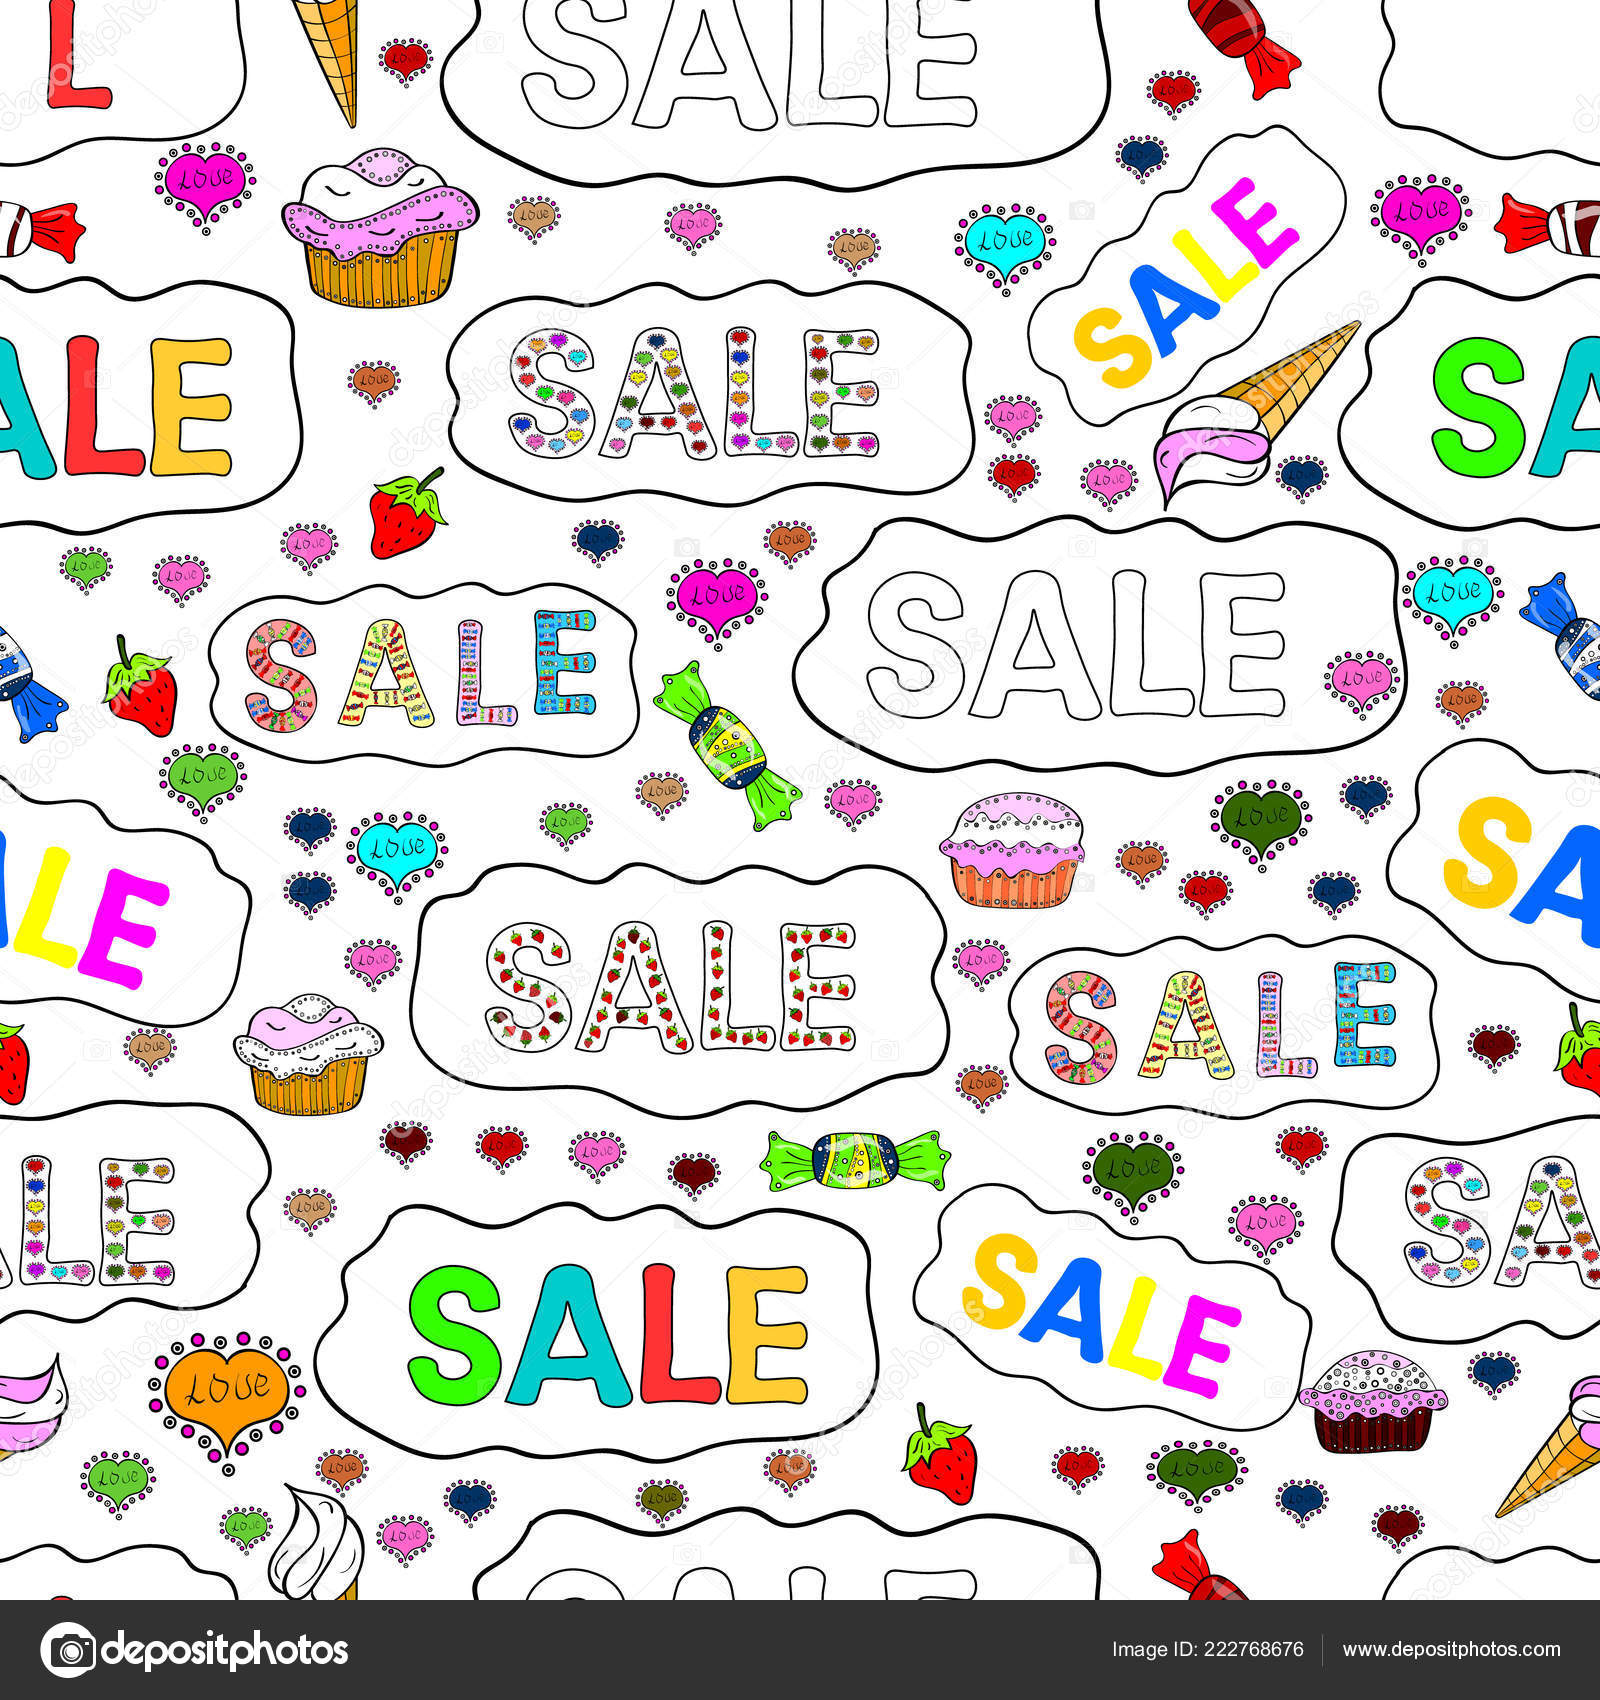 Unduh 66 Background Banner Online Shop Paling Keren